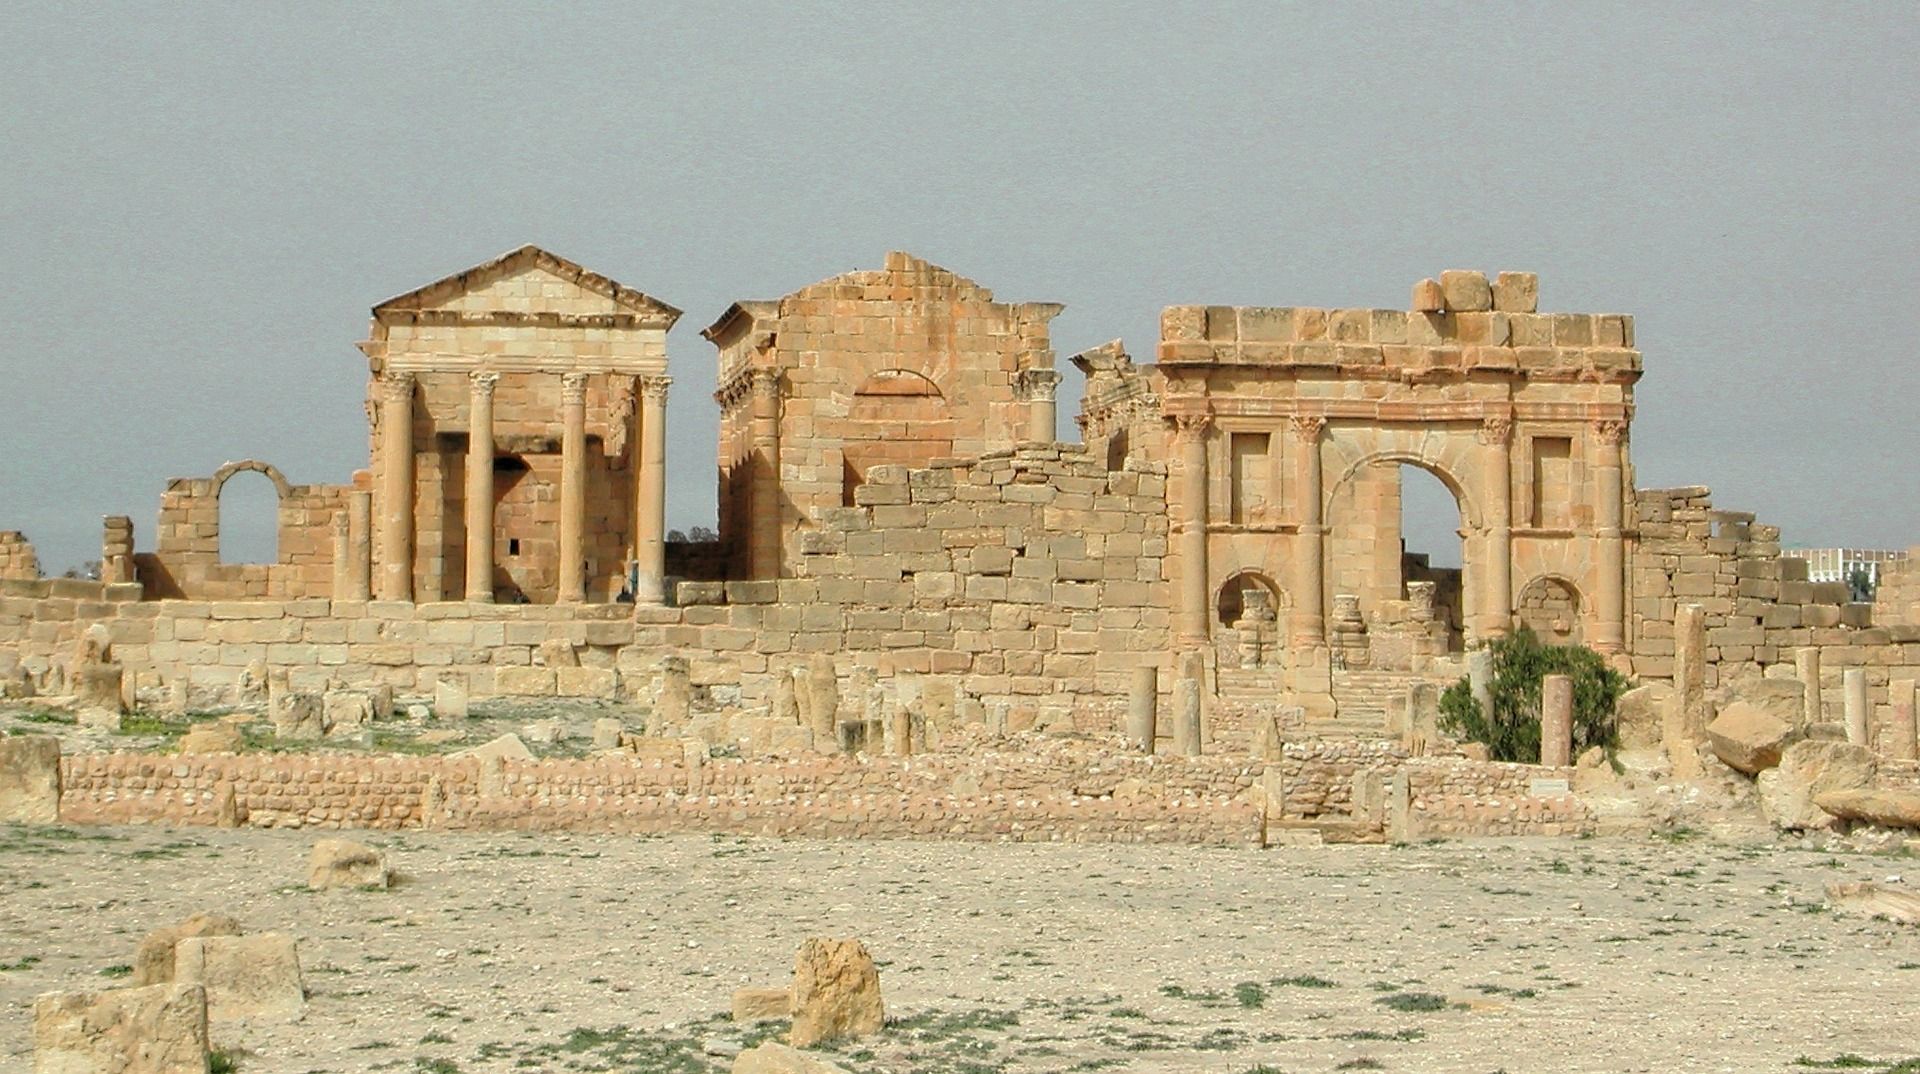 Sbeitla ruins in Tunisia